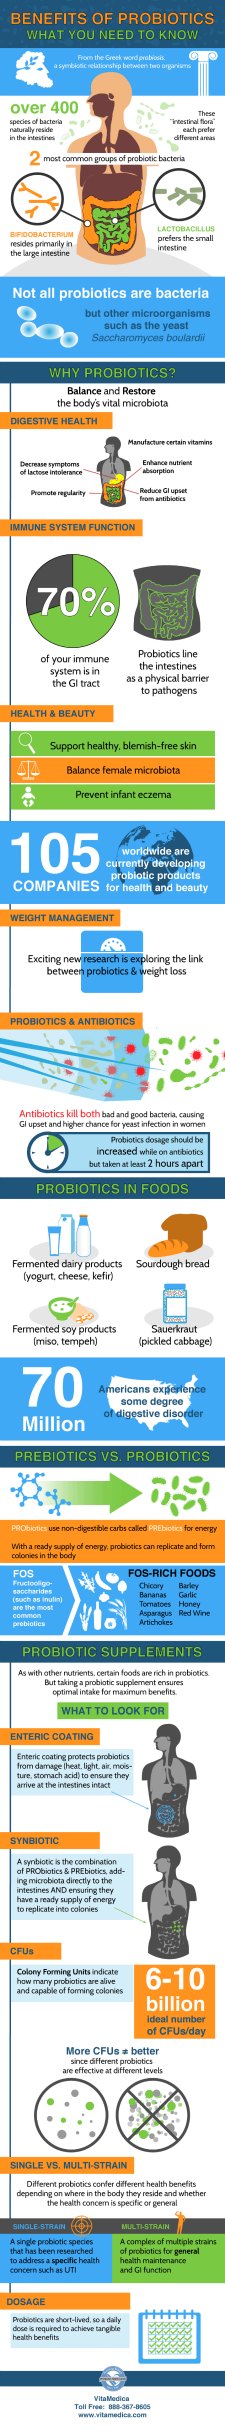 Probiotic Benefits Infographic